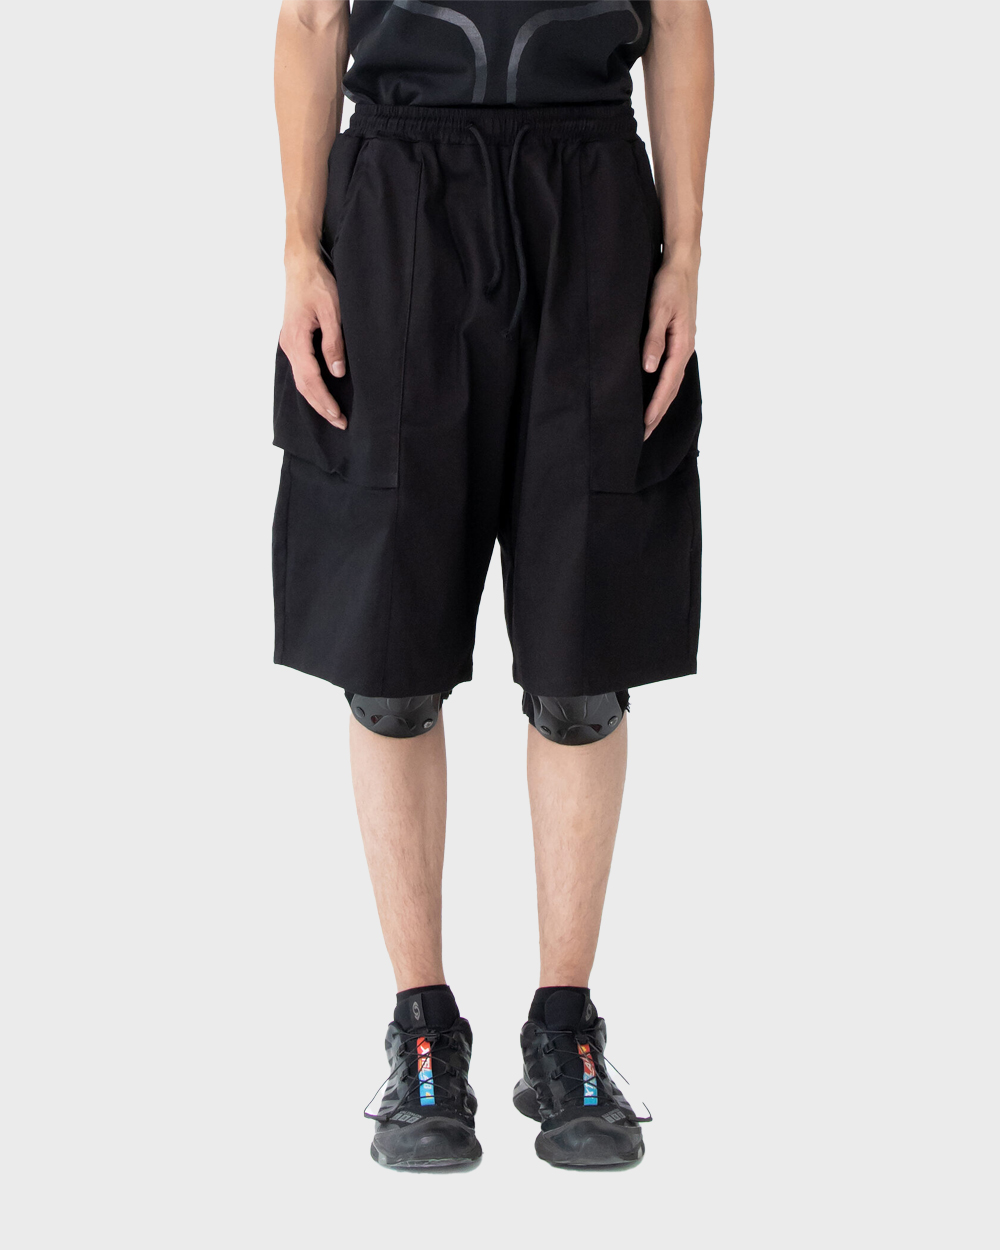 Shorts (Black)